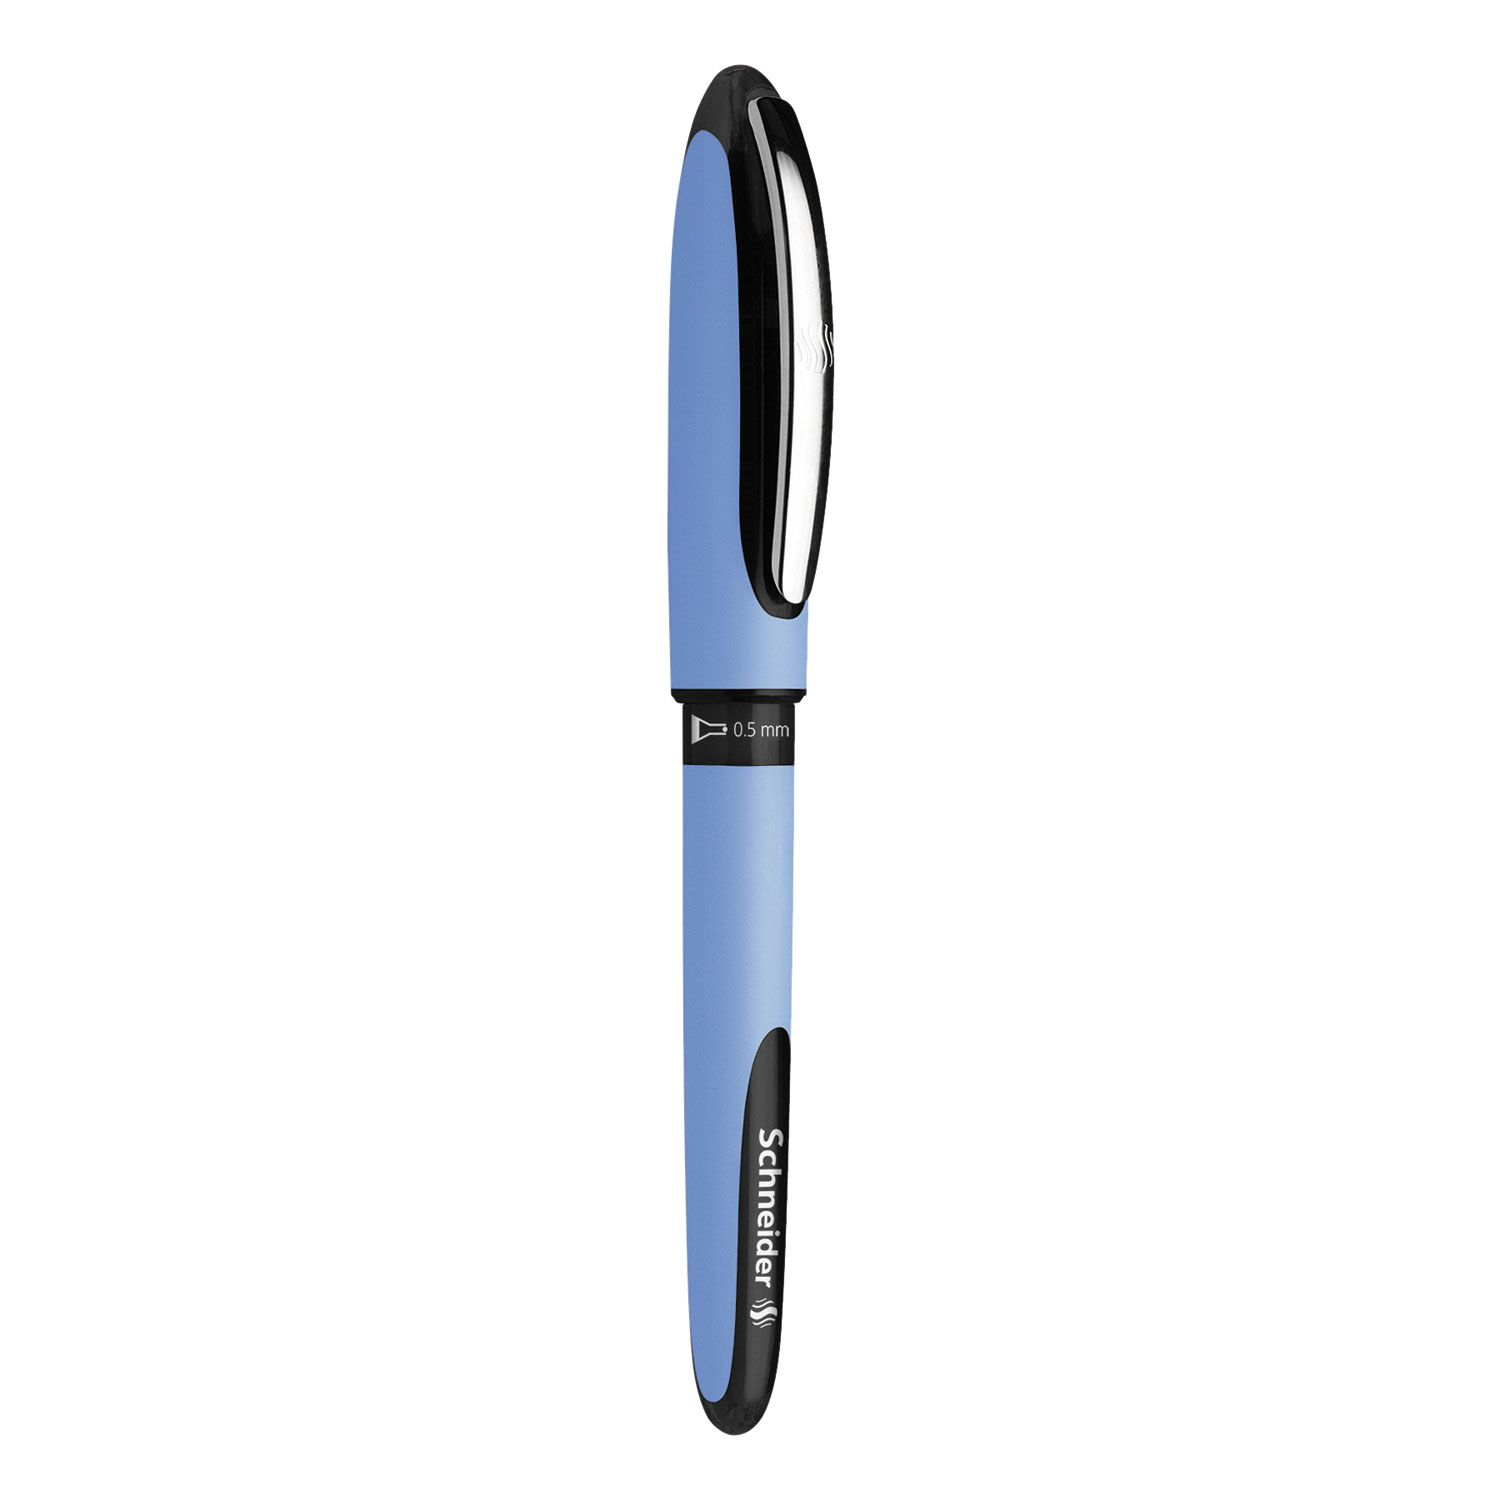  Stride 183501 Schneider One Hybrid Stick Roller Ball Pen, 0.5mm, Black Ink, Blue Barrel, 10/Box (STW183501) 